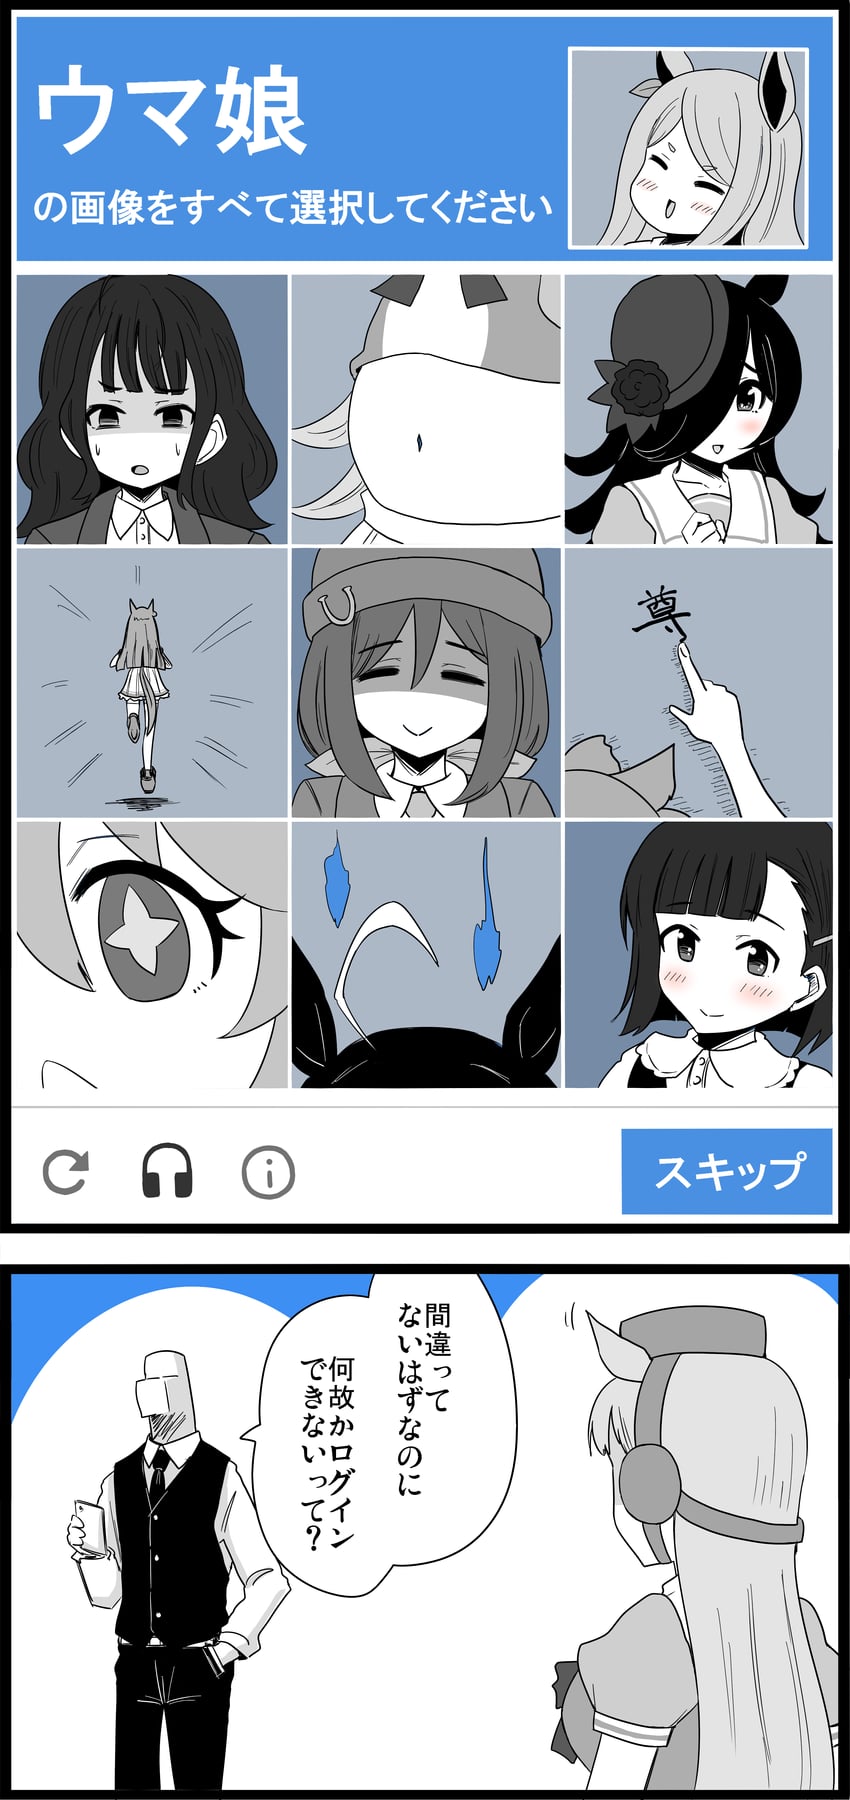 trainer, rice shower, mejiro mcqueen, gold ship, silence suzuka, and 8 more (umamusume) drawn by ginbis